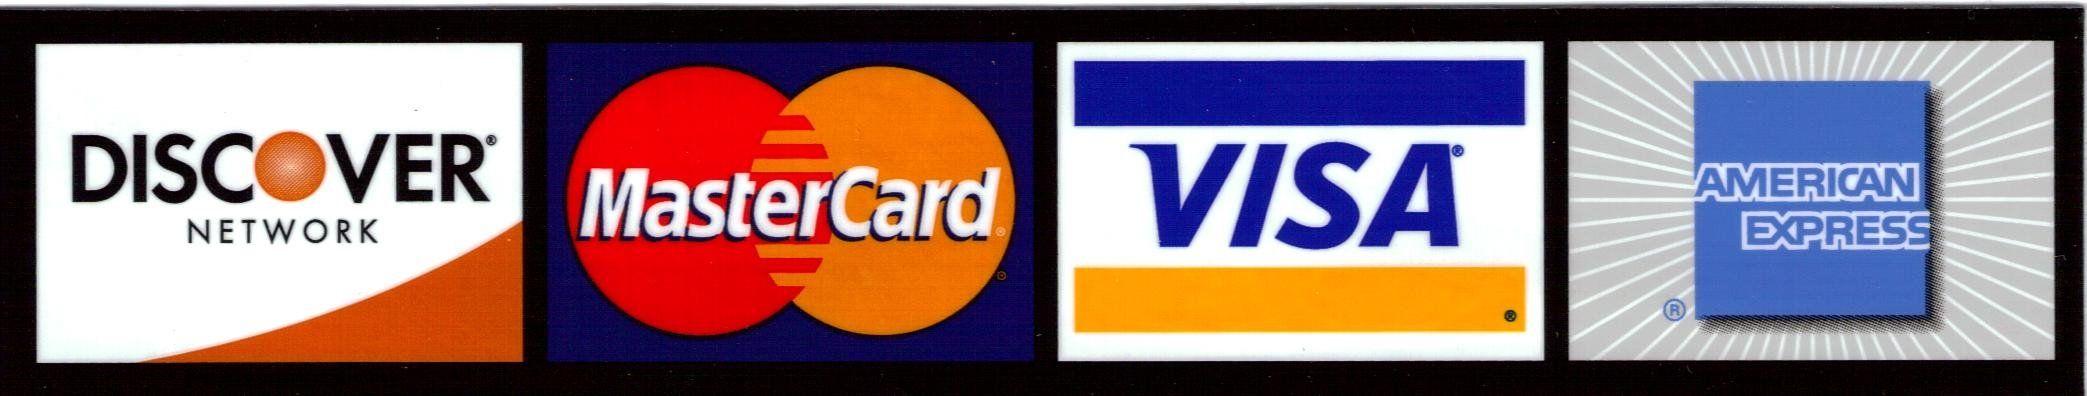 American Express Visa MasterCard Logo - Visa mastercard discover Logos